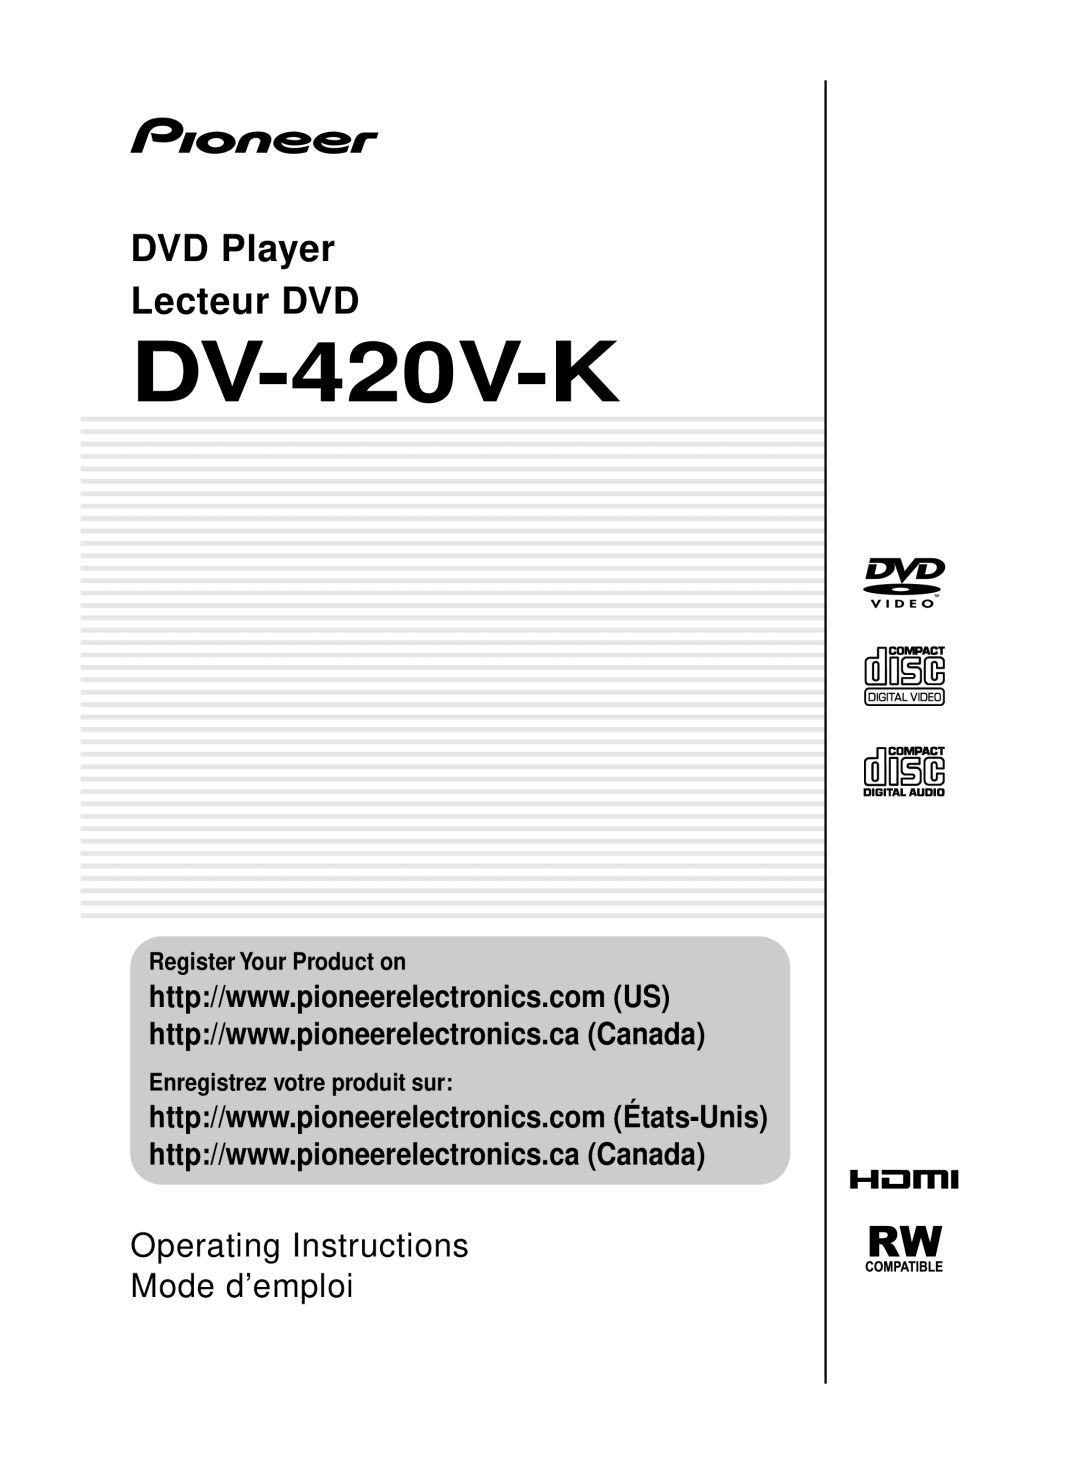 Pioneer DV-420V-K, DVP 420K operating instructions DVD Player Lecteur DVD, Operating Instructions Mode d’emploi 